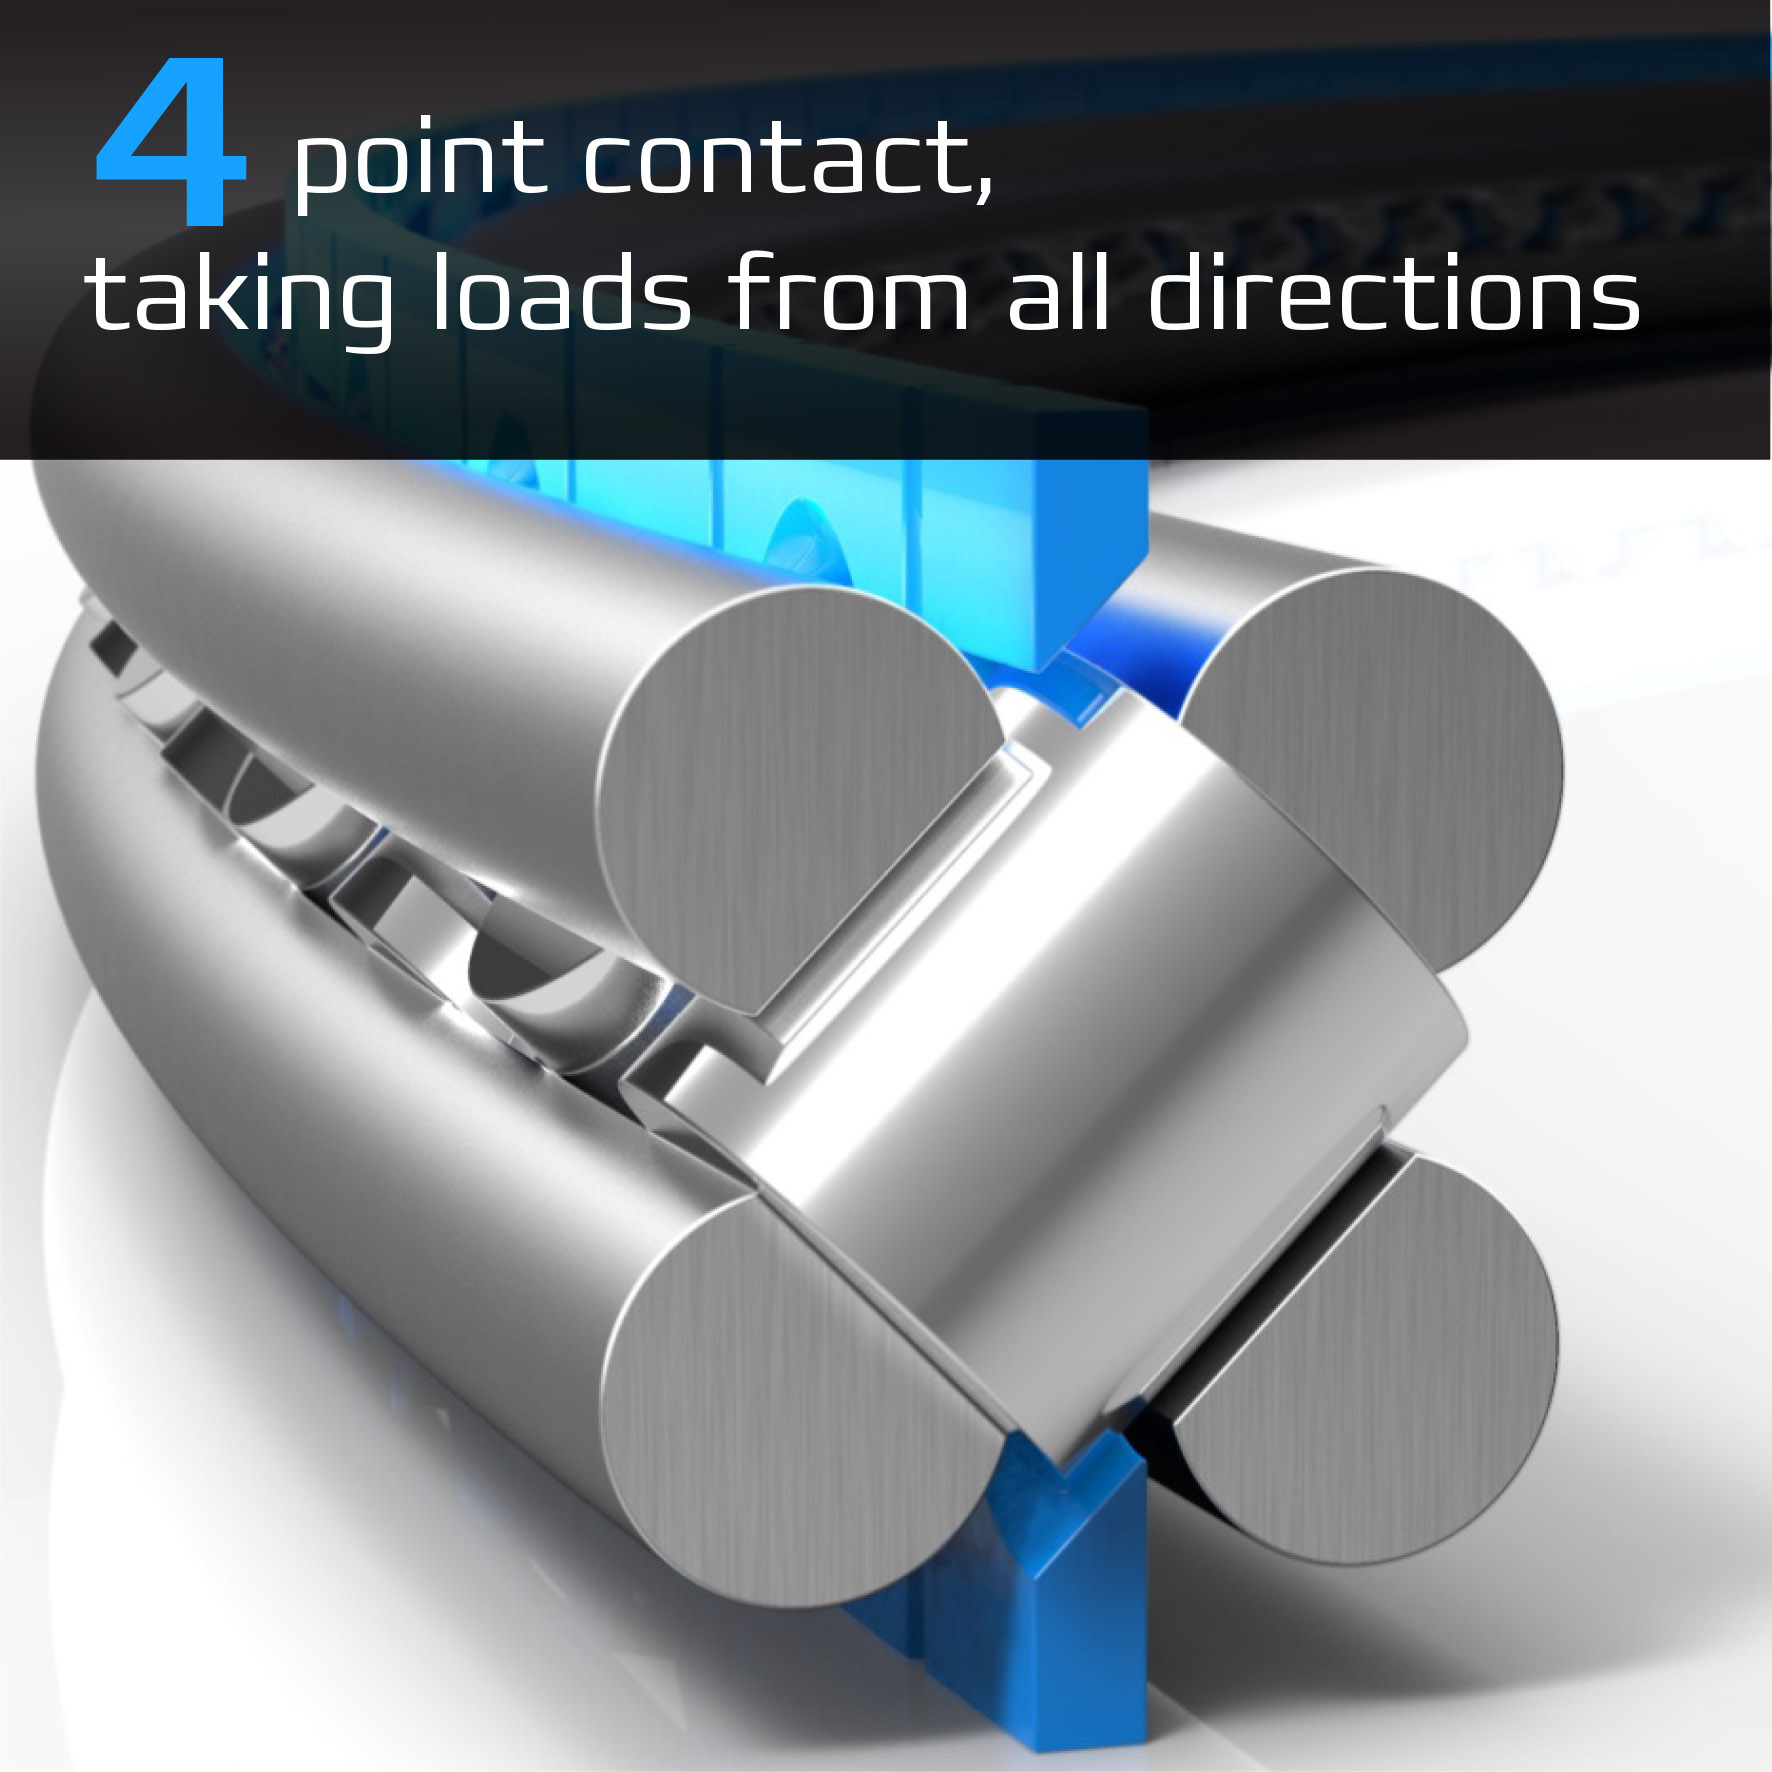 4 point contact principle